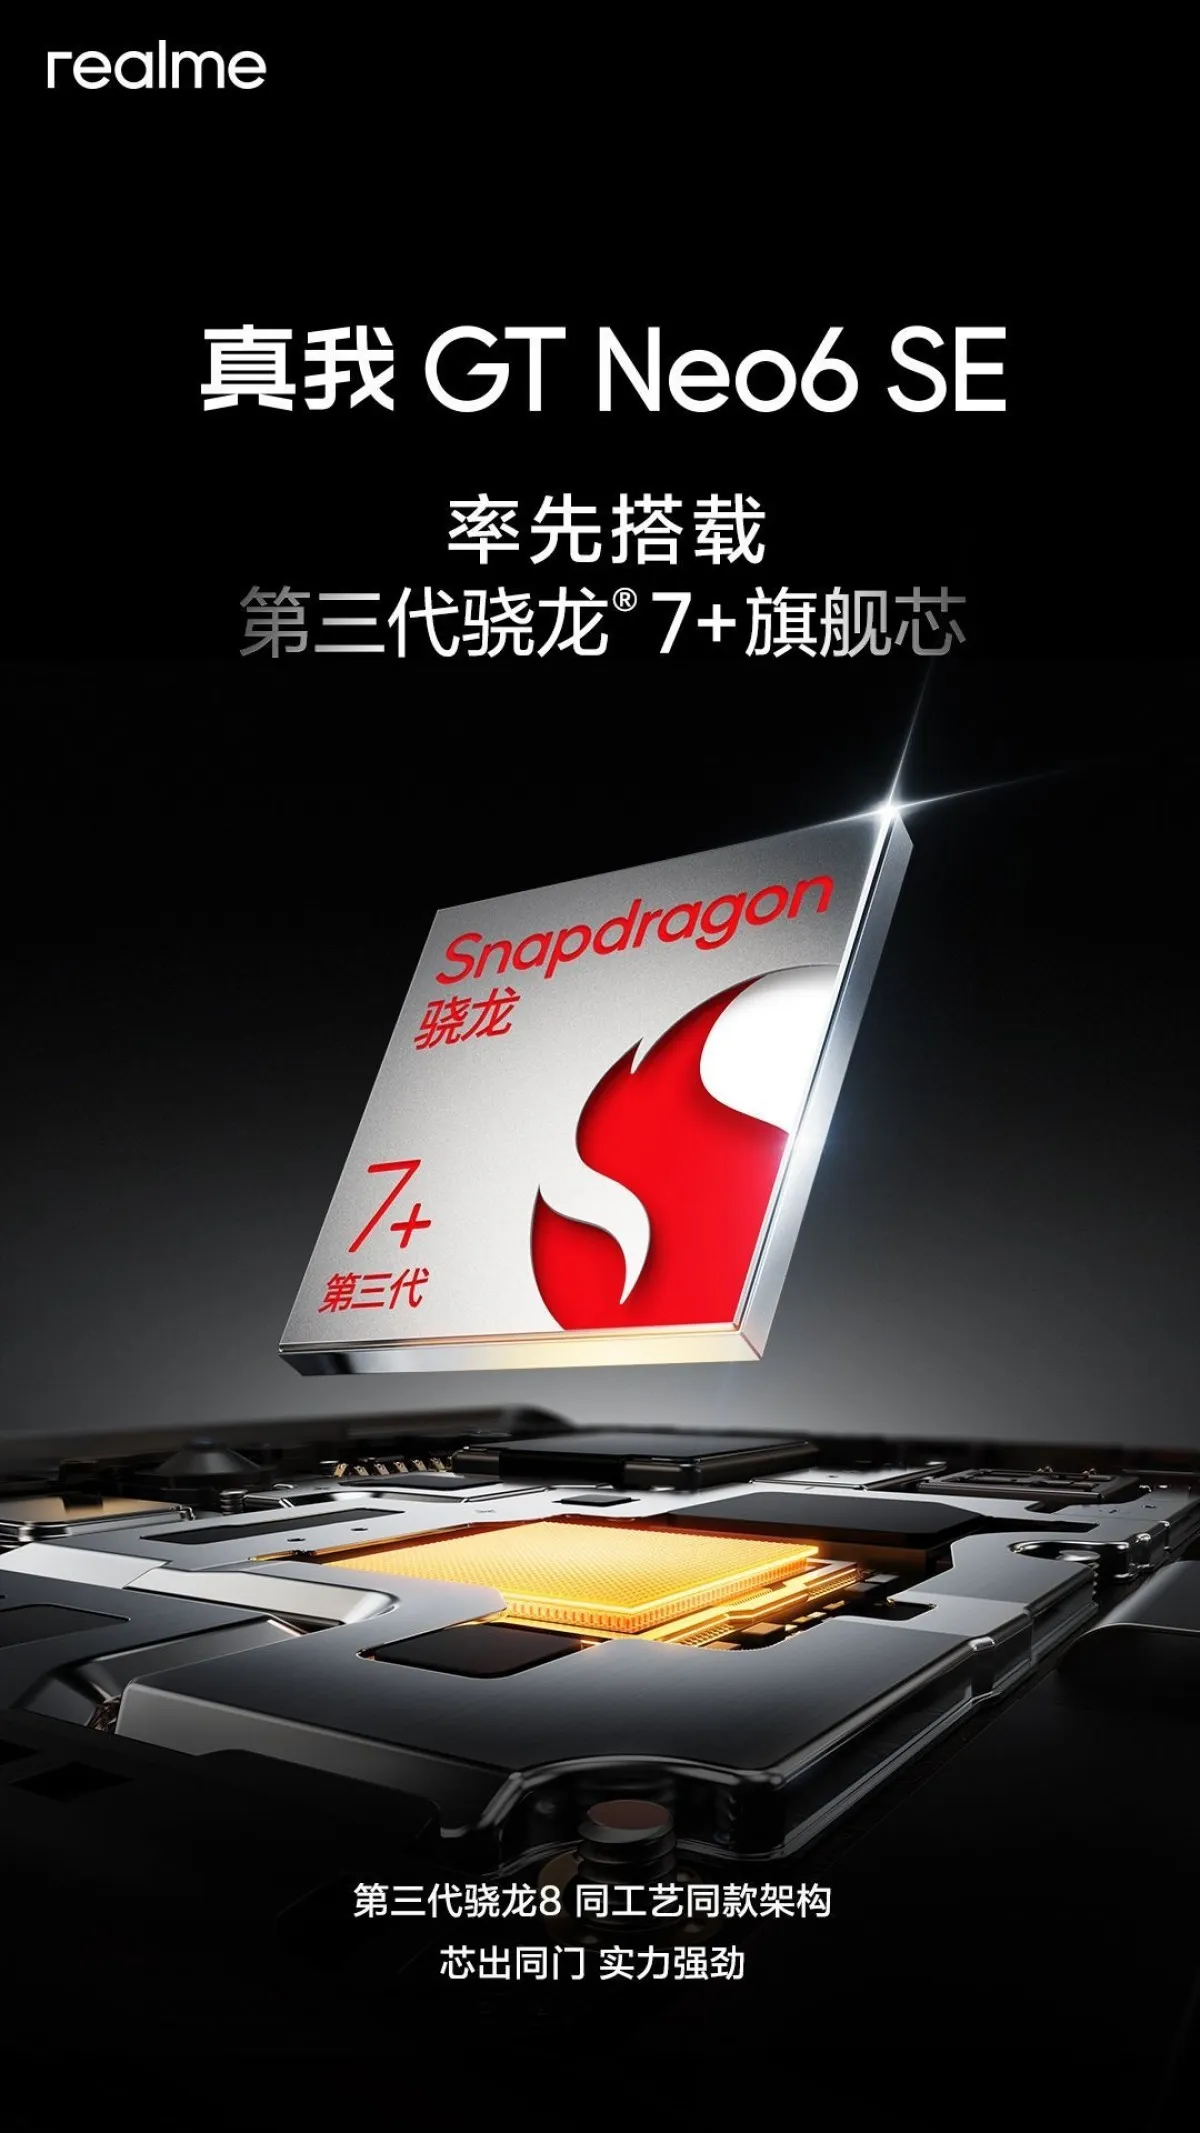 realme GT Neo6 SE sẽ sử dụng chip Snapdragon 7+ Gen 3